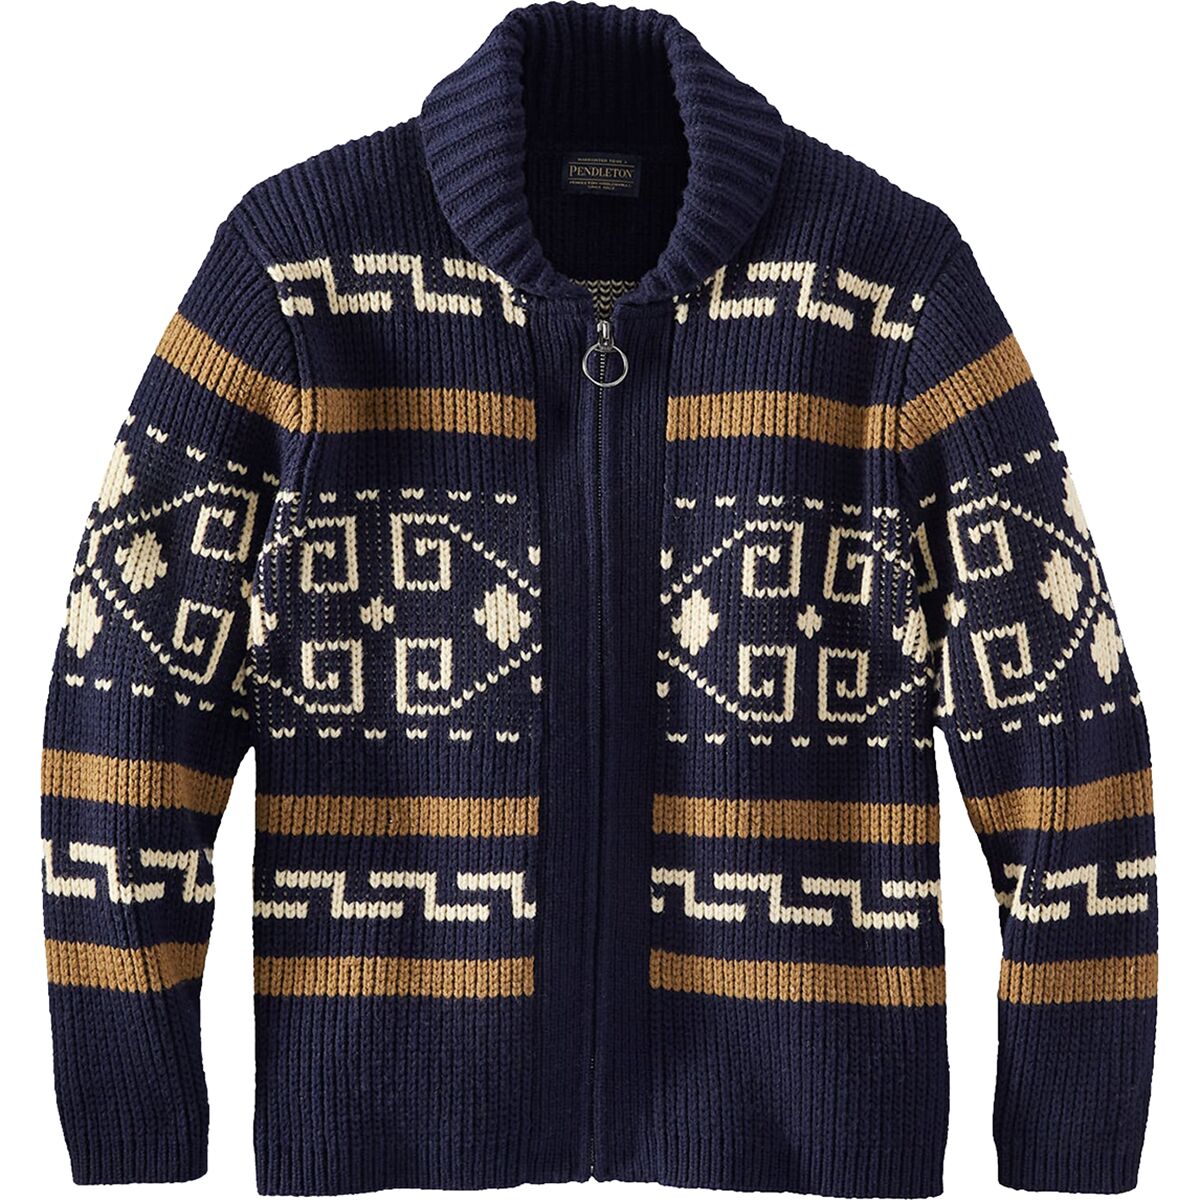 Pendleton Original Westerley Sweater - Men's - Clothing